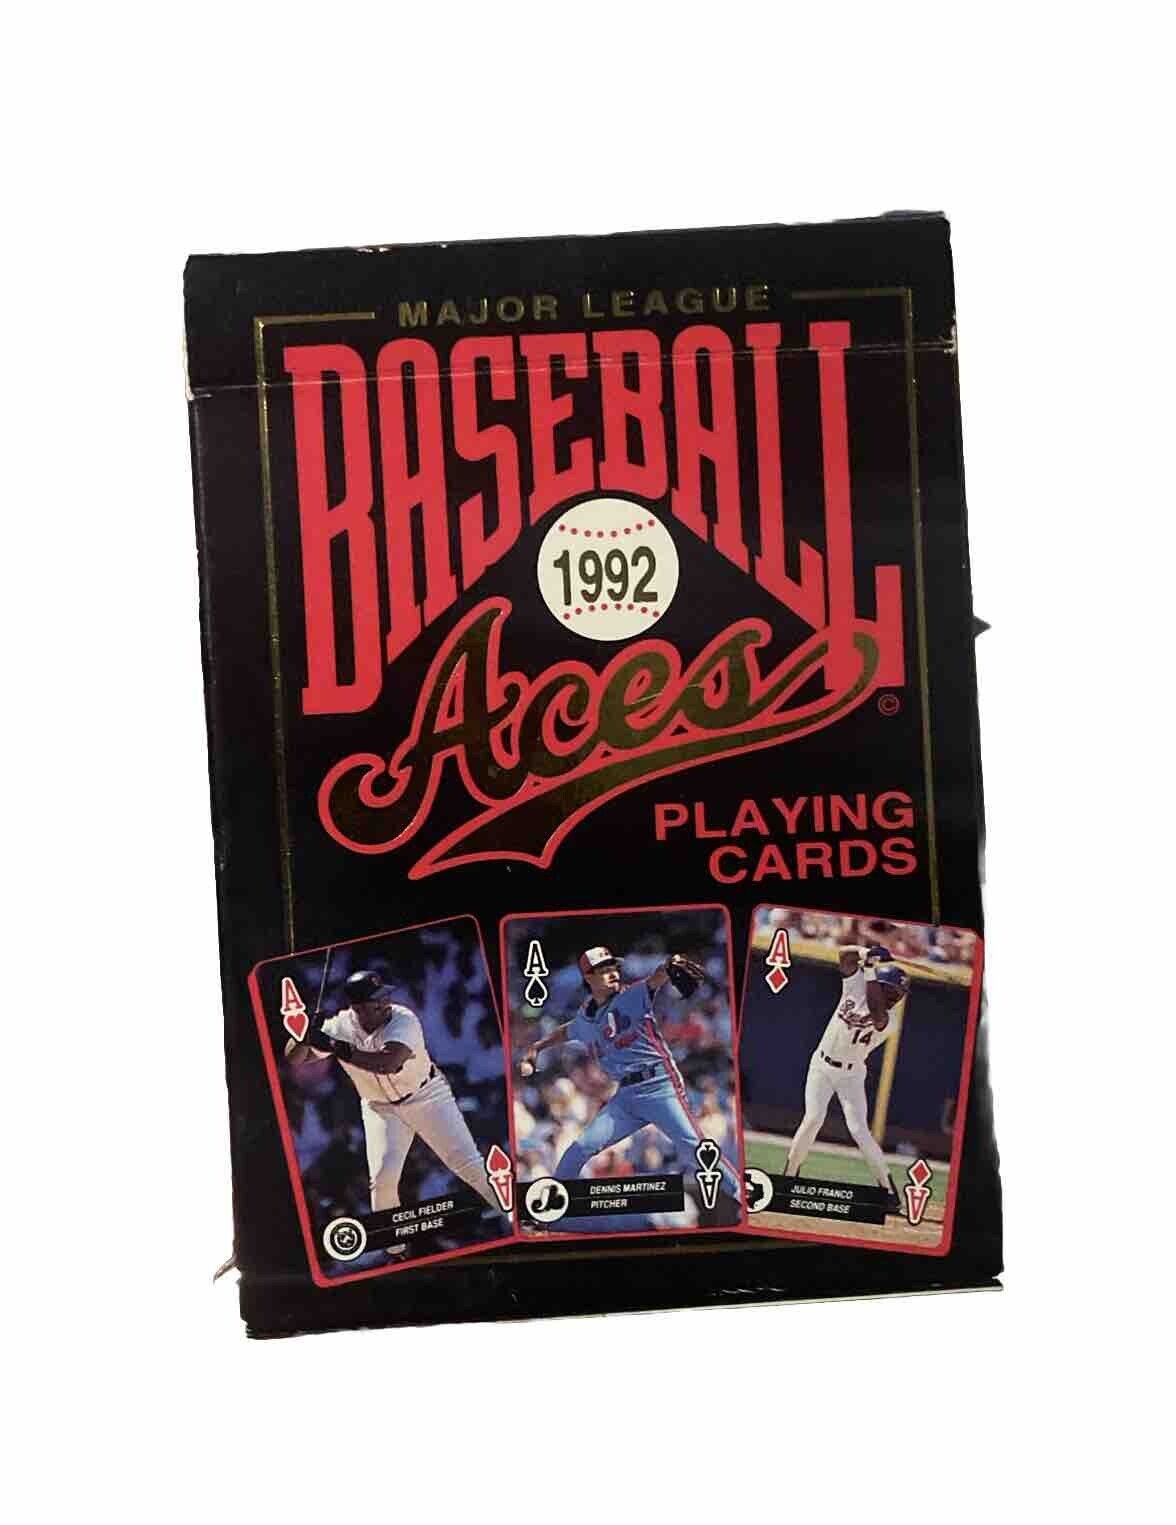 1992 MLB Major League Baseball Aces Playing Cards